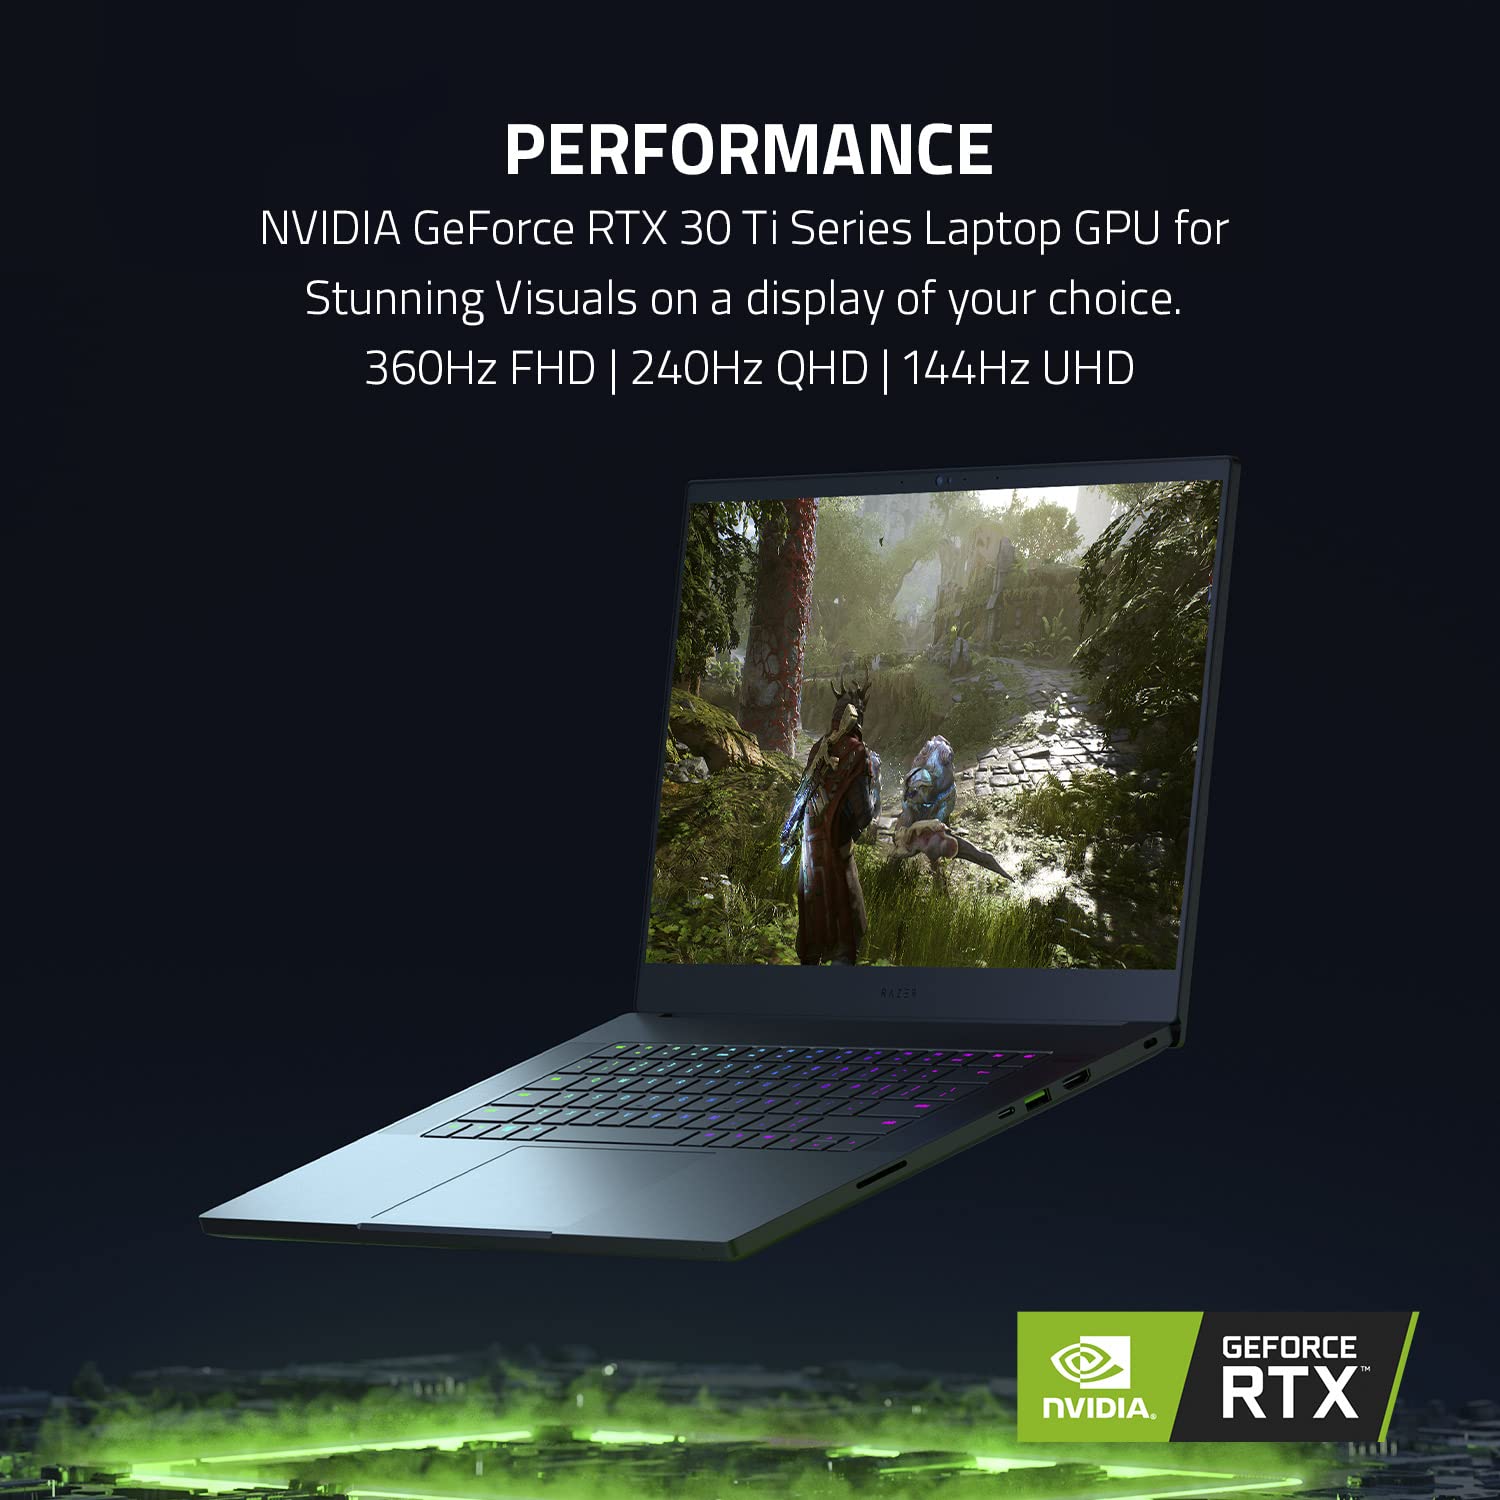 Razer Blade 15 Gaming Laptop: NVIDIA GeForce RTX 3070 Ti - 12th Gen Intel 14-Core i7 CPU - 15.6” QHD 240Hz - 16GB DDR5 RAM - 1TB PCIe SSD - Windows 11 - CNC Aluminum - Chroma RGB - Thunderbolt 4